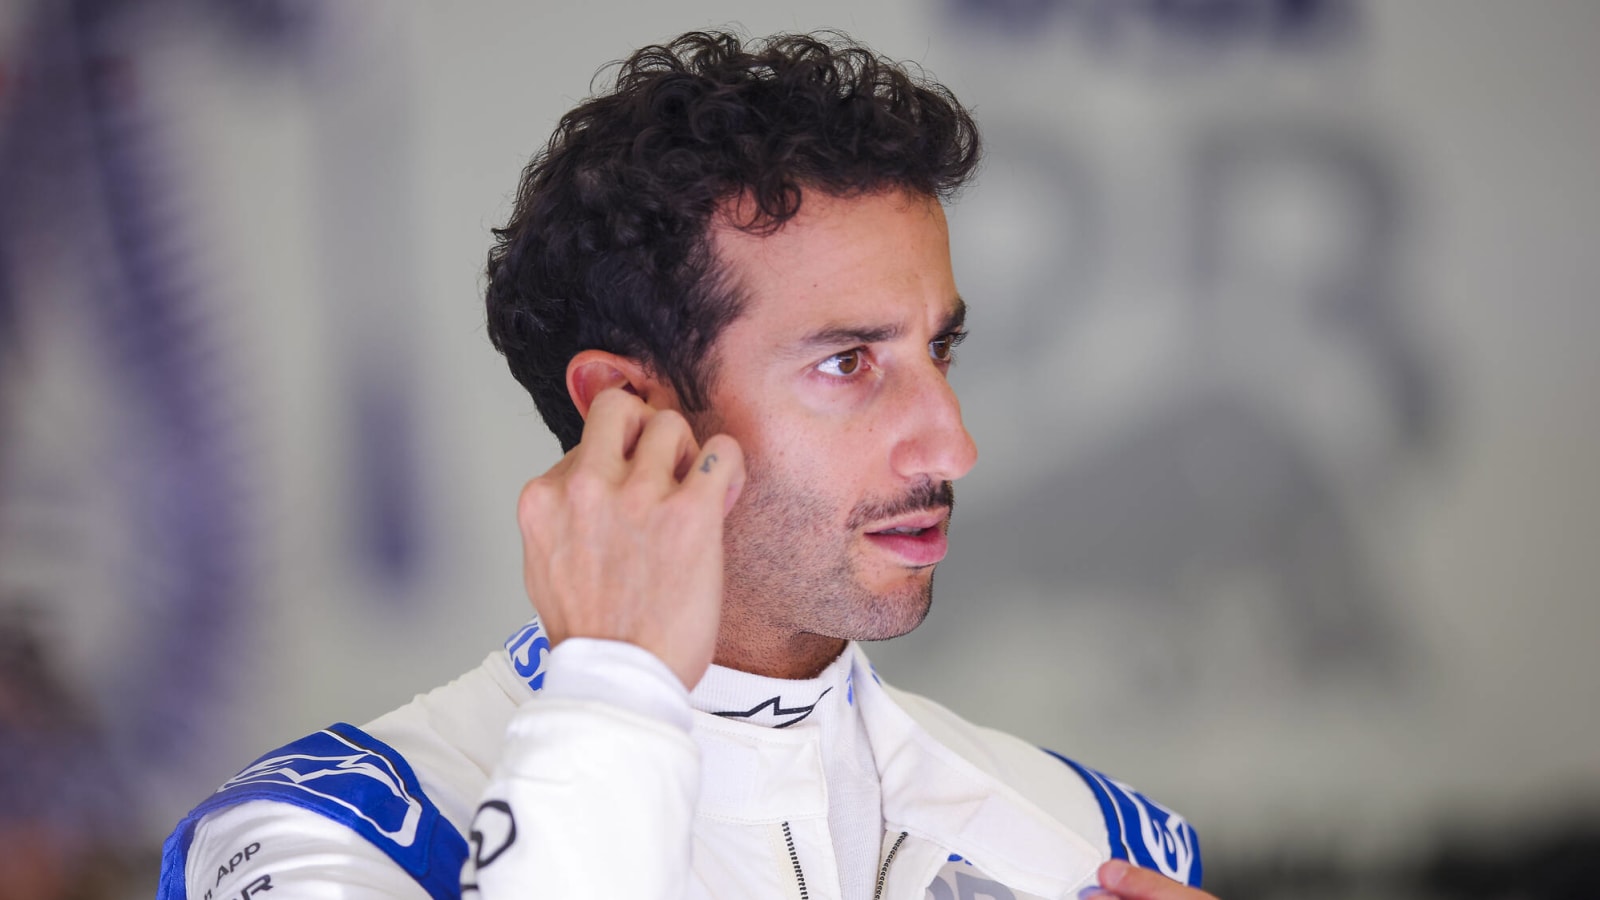 Giancarlo Fisichella claims Mercedes’ quest for Lewis Hamilton’s replacement should end with Daniel Ricciardo